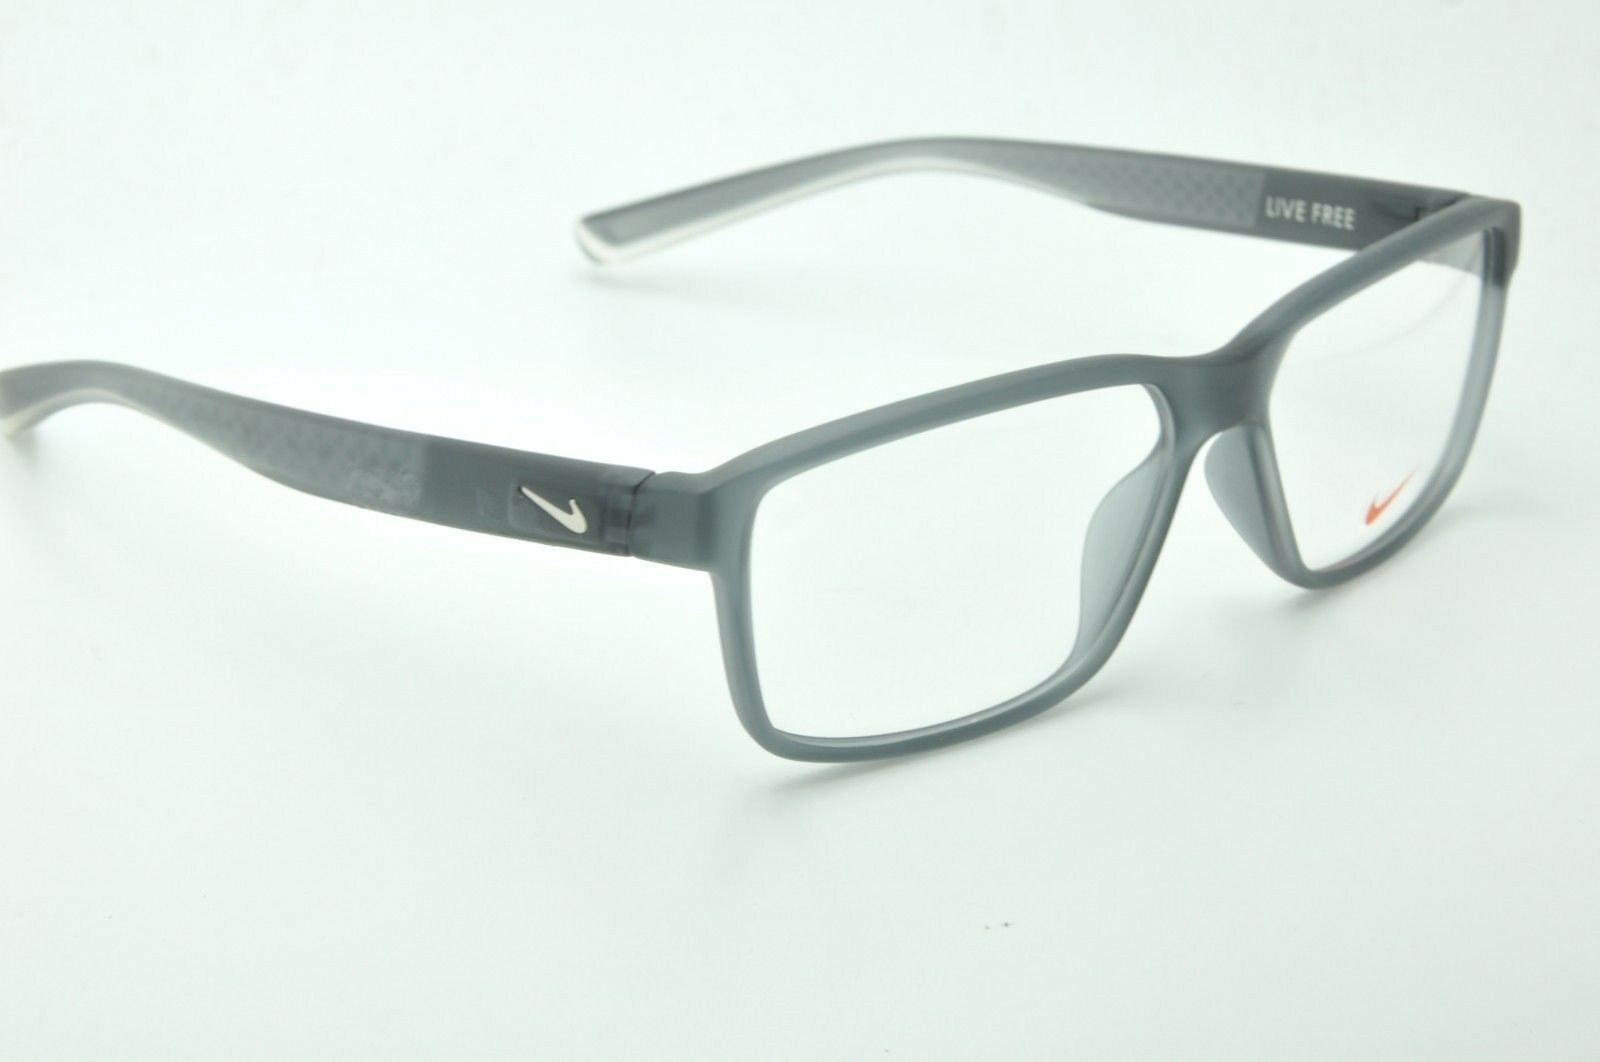 New Nike Nk 7092 Eyeglasses 068 Matte Crystal Gray Frames 55mm Eyeglass Frames